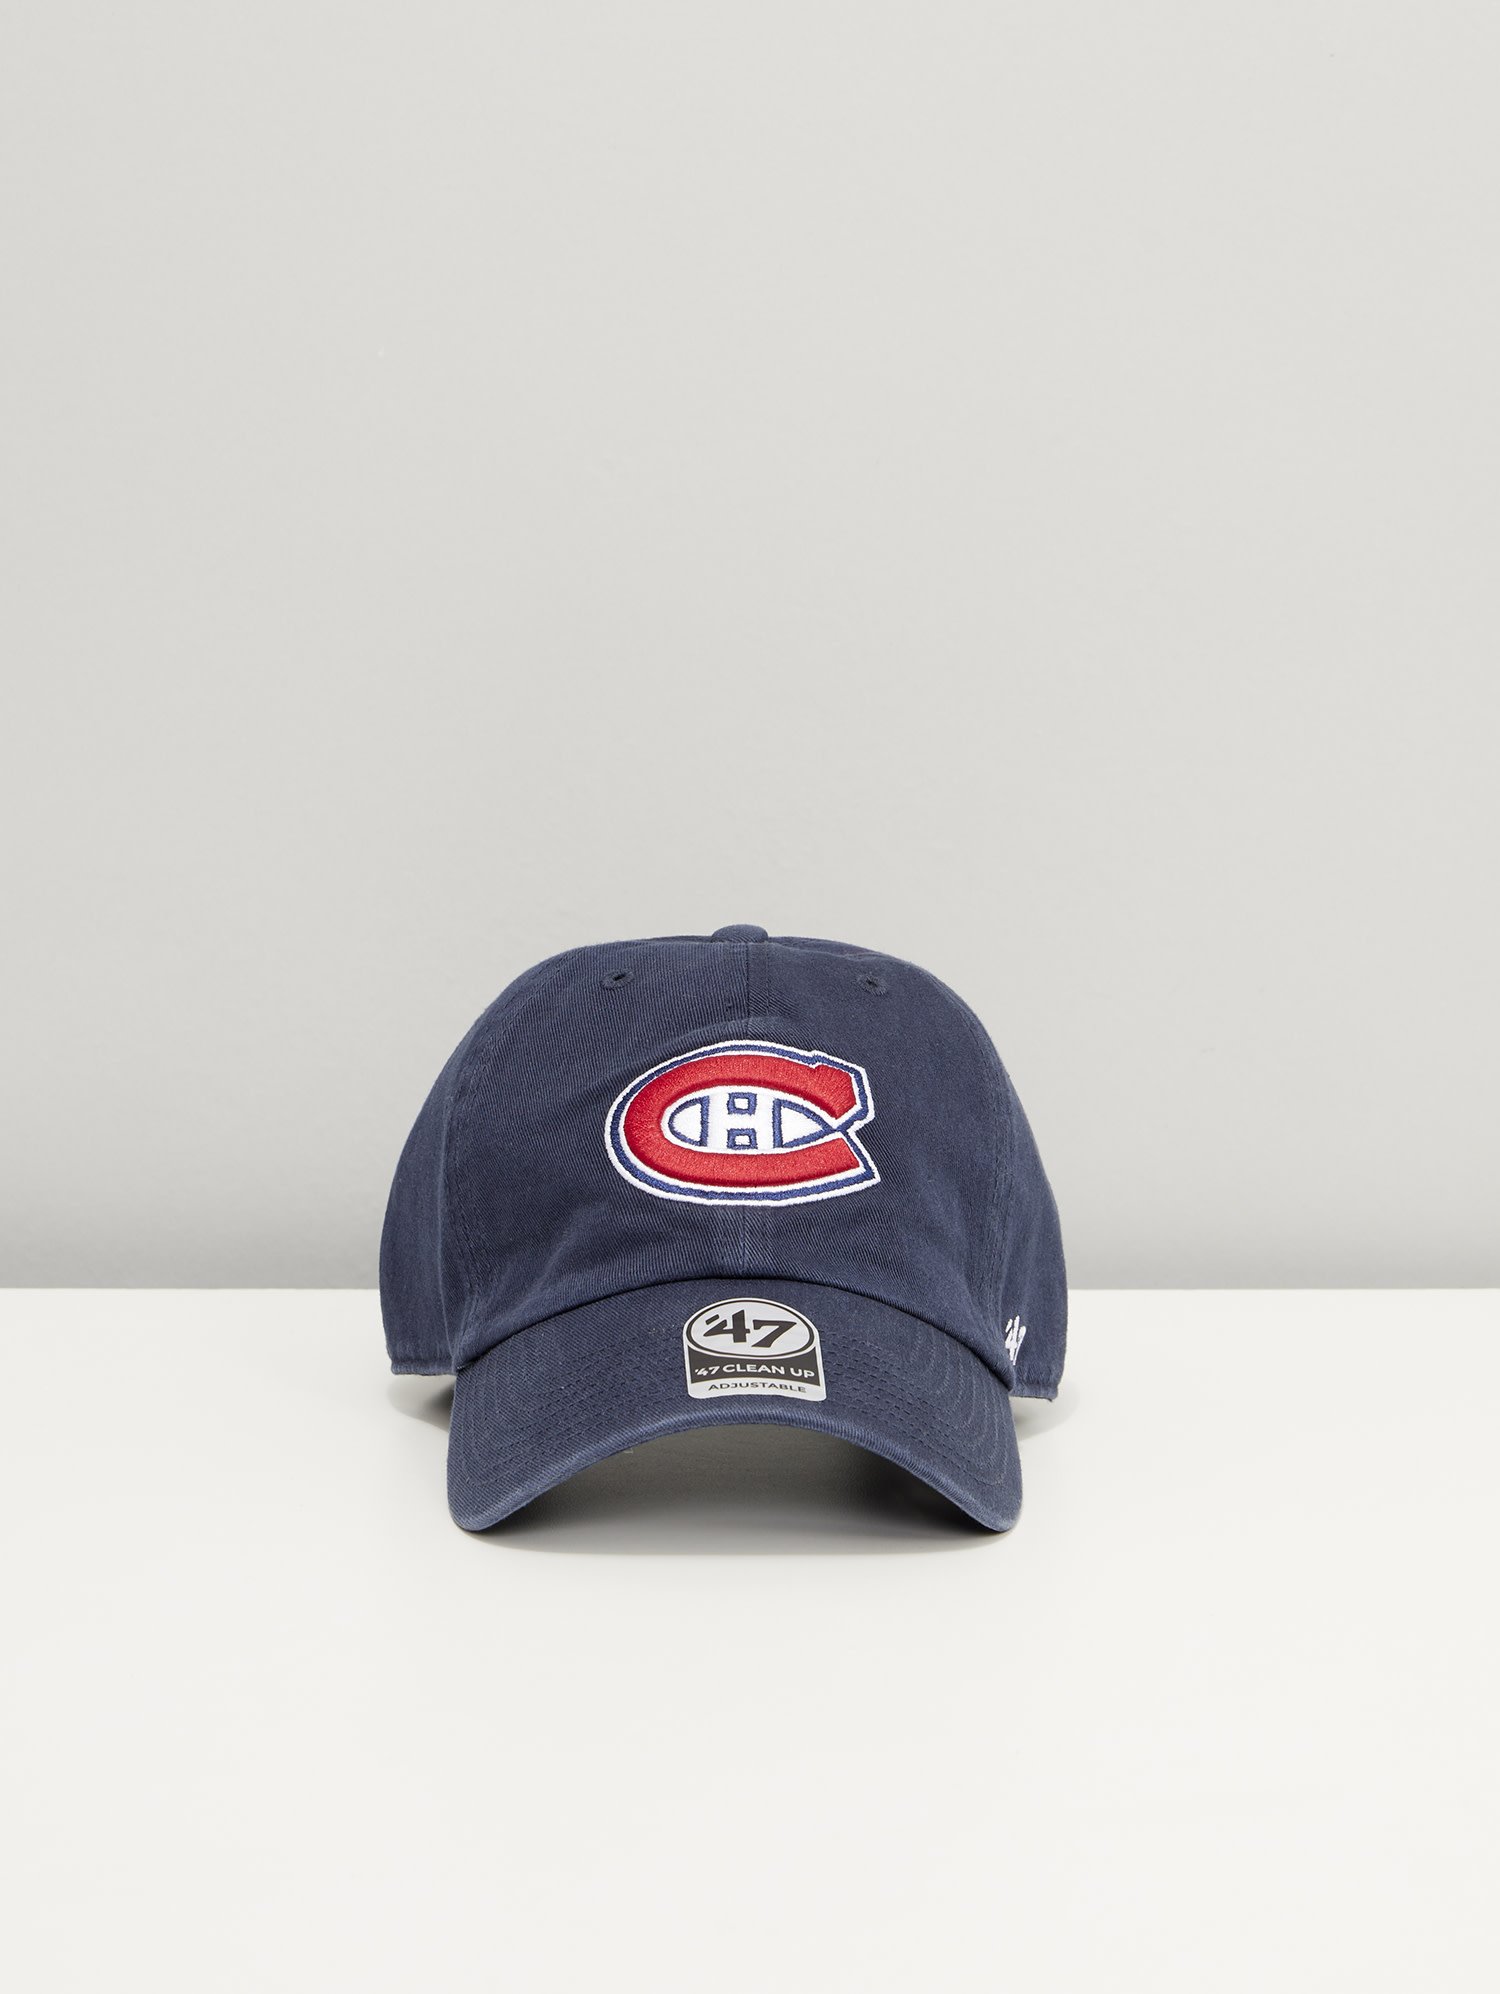 Original Six NHL 47 Brand Men's Grey Echo T-Shirt — Maison Sport Canadien /